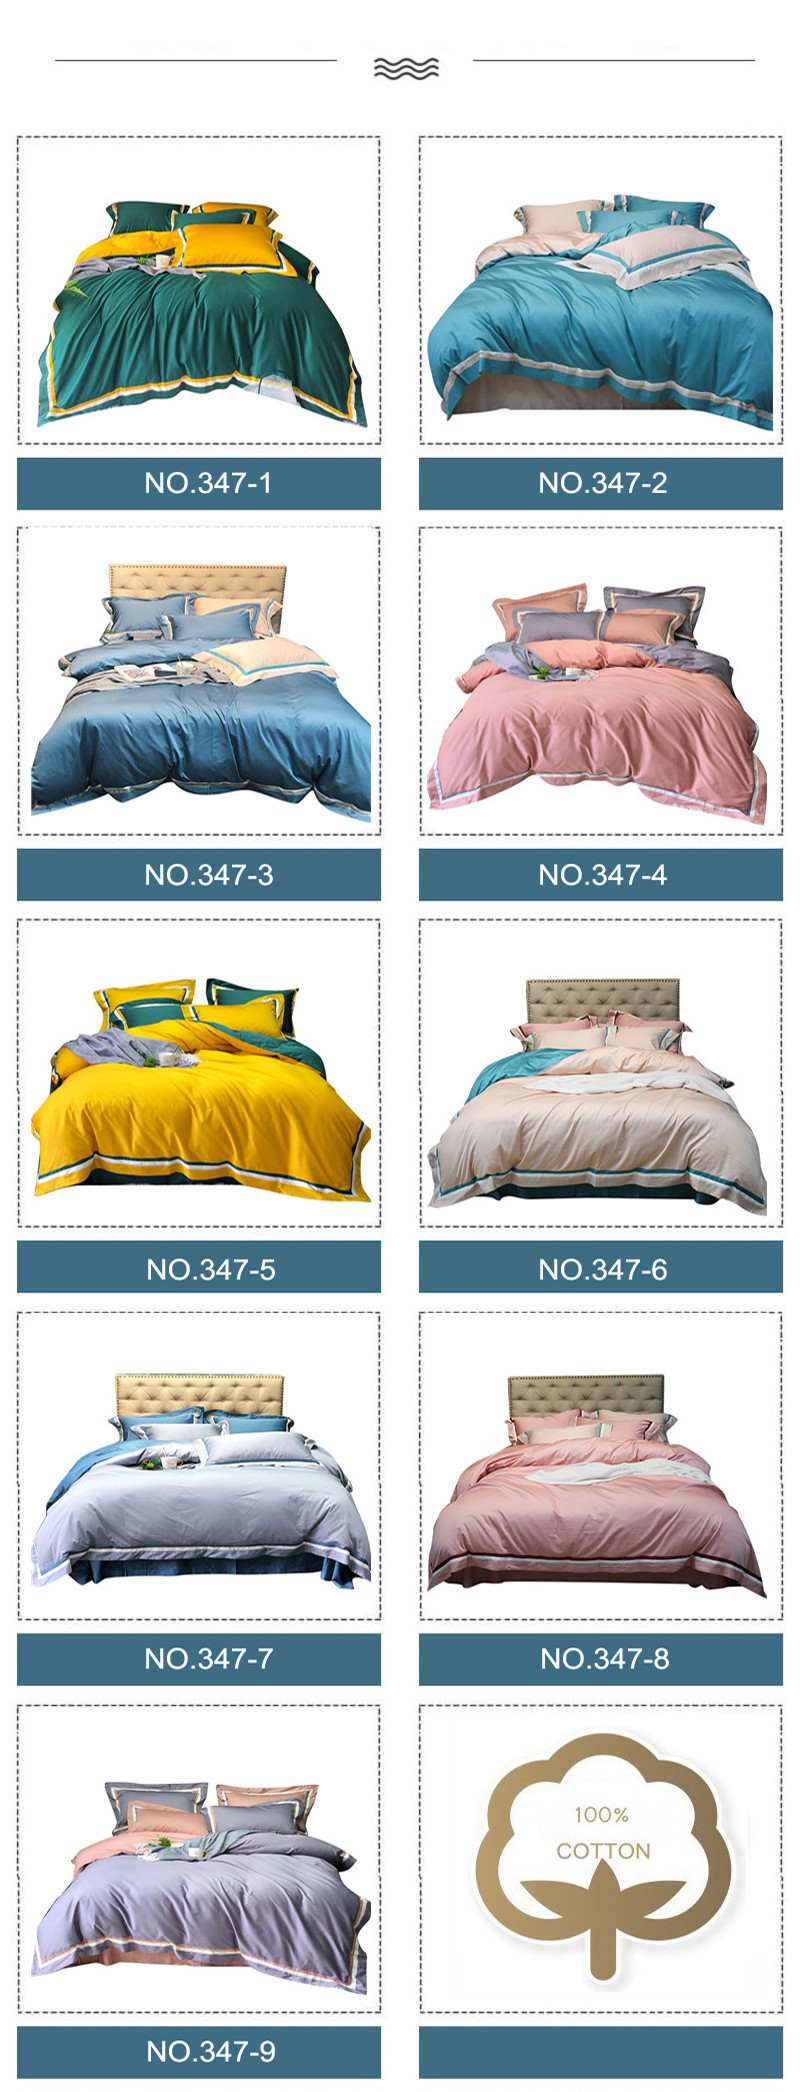 Bedding Set 100% Long Staple Cotton Good Quality